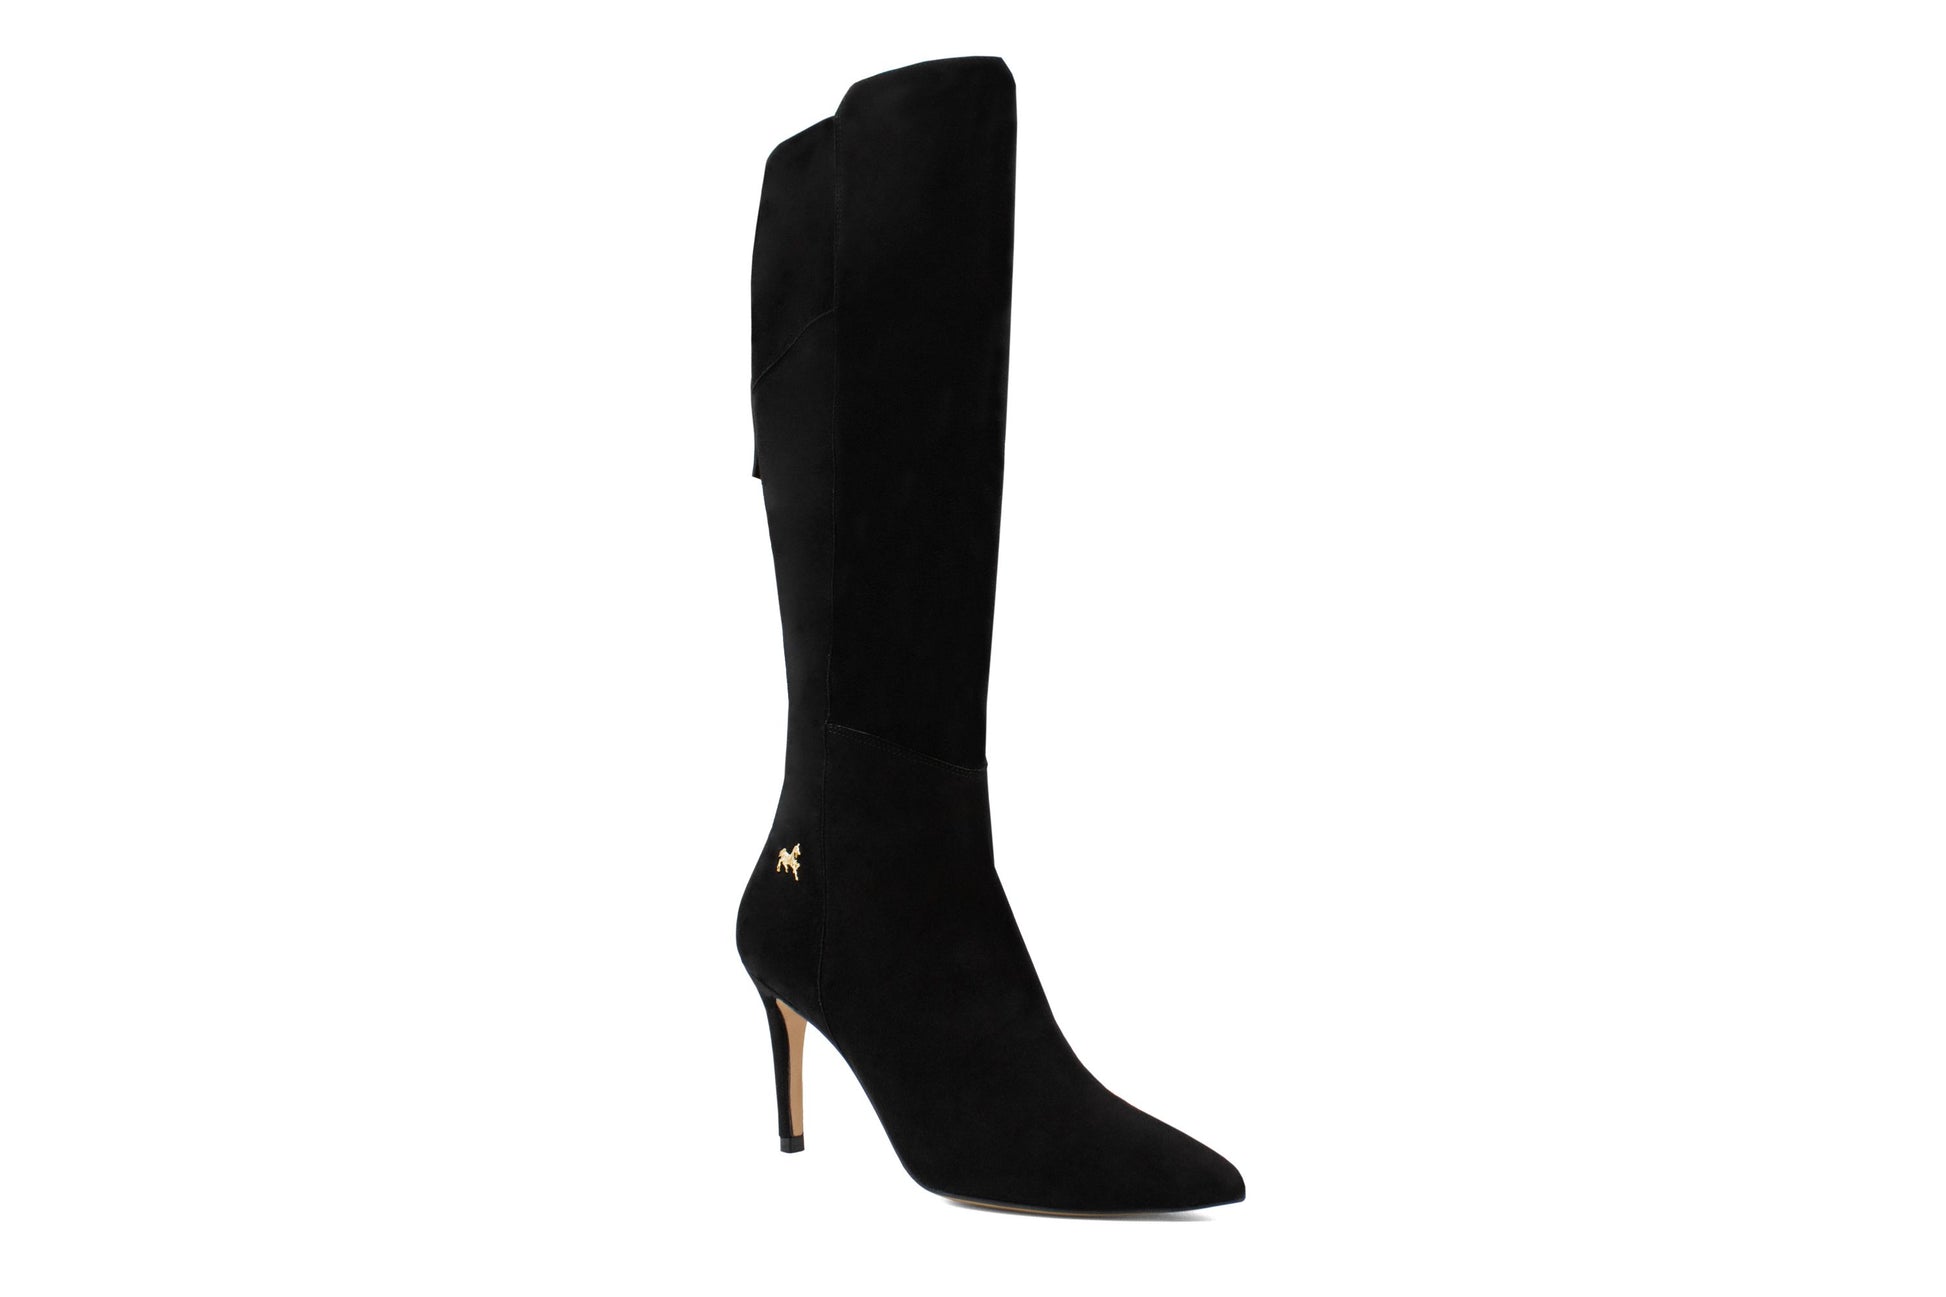 Cavalinho Flair Boots - Sizes 9, 10 - Black - 48100599.01_2